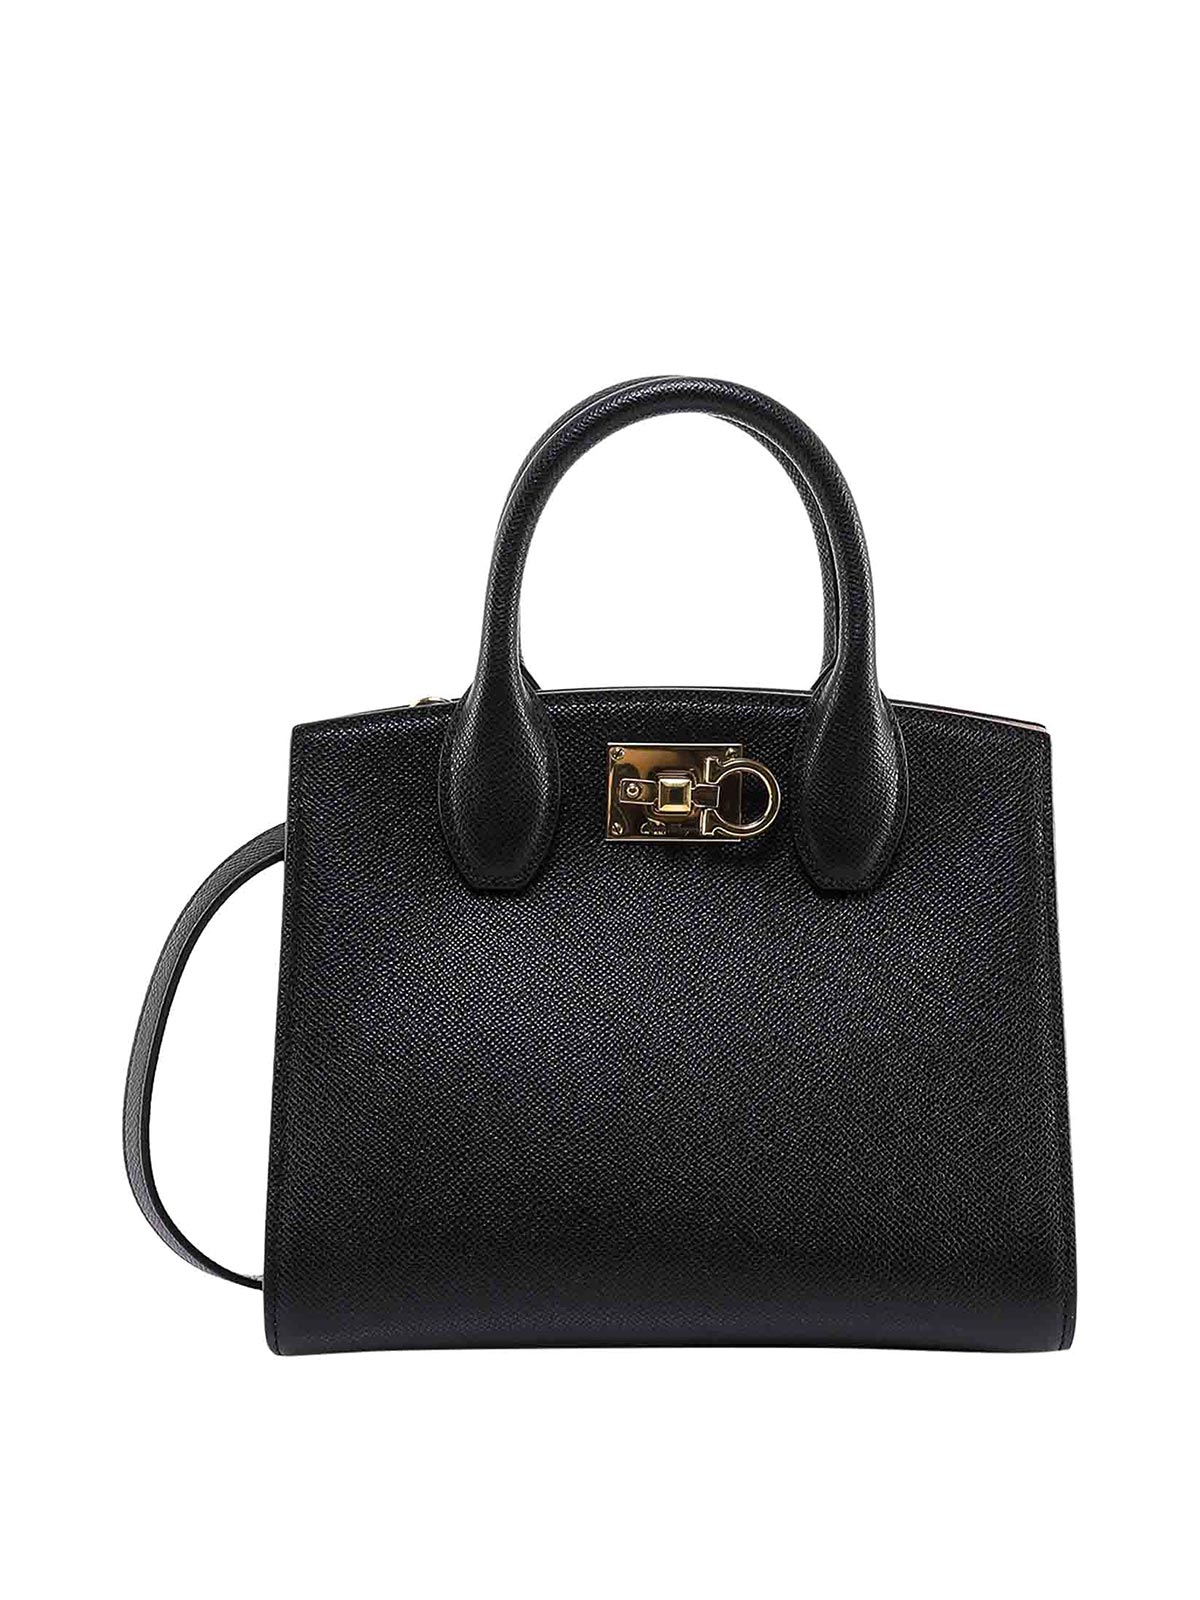 Ferragamo Leather Handbag With Metal Gancini Detail In Animal Print